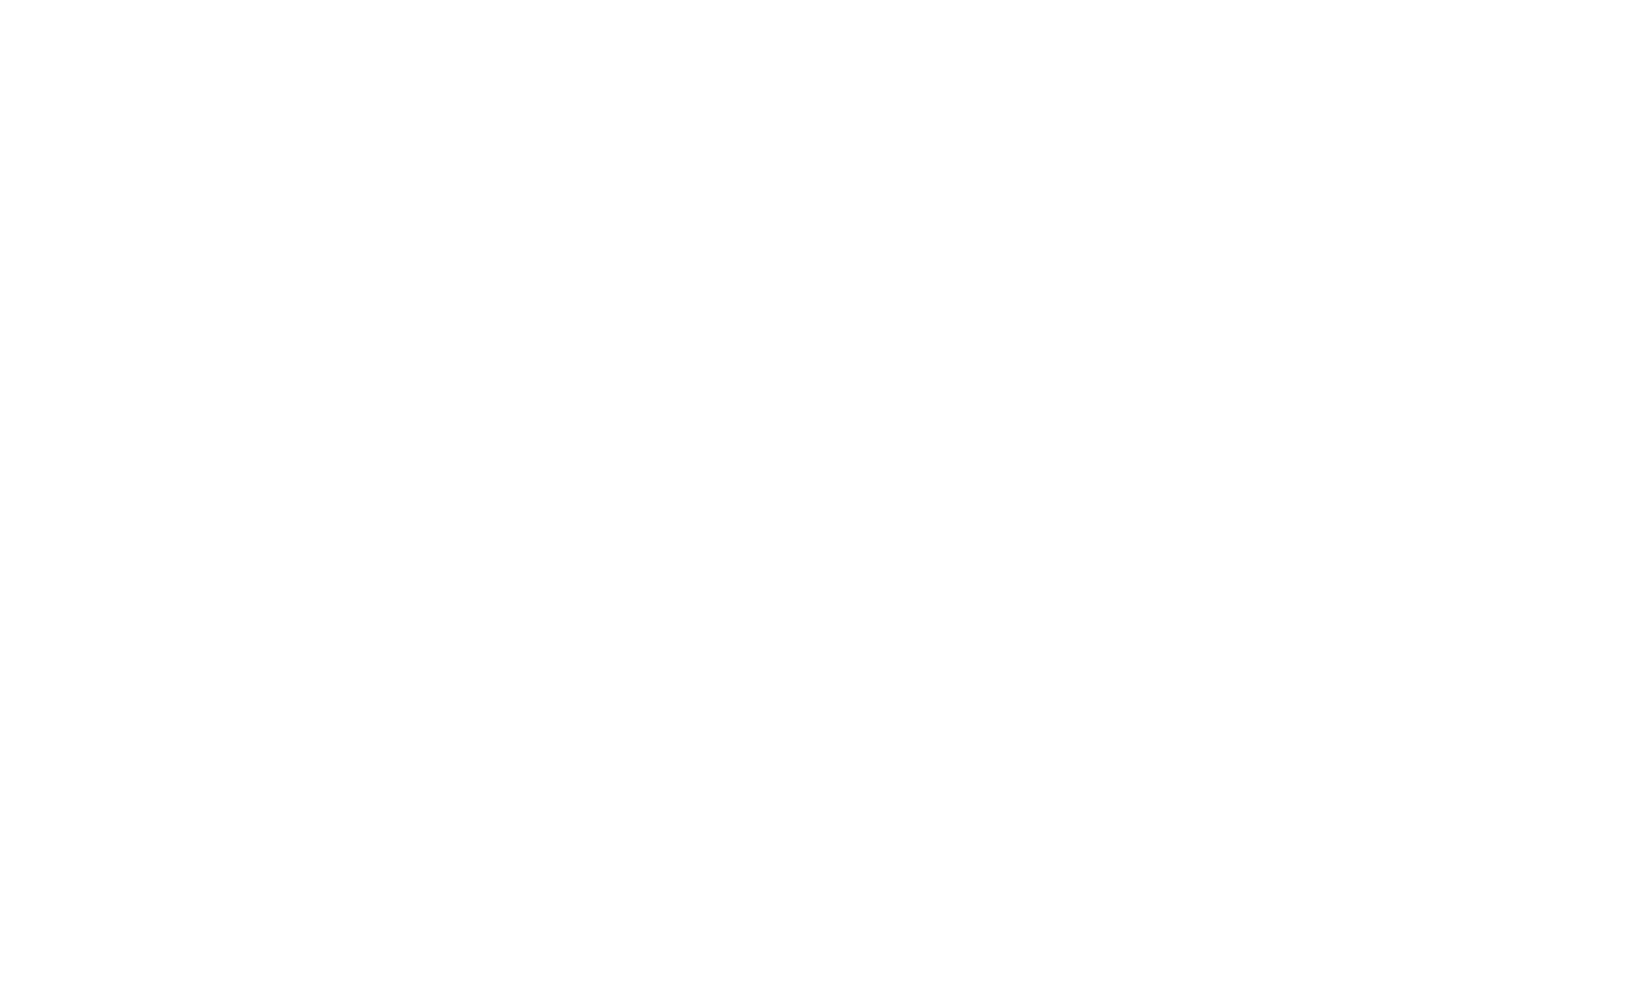 FIRElink